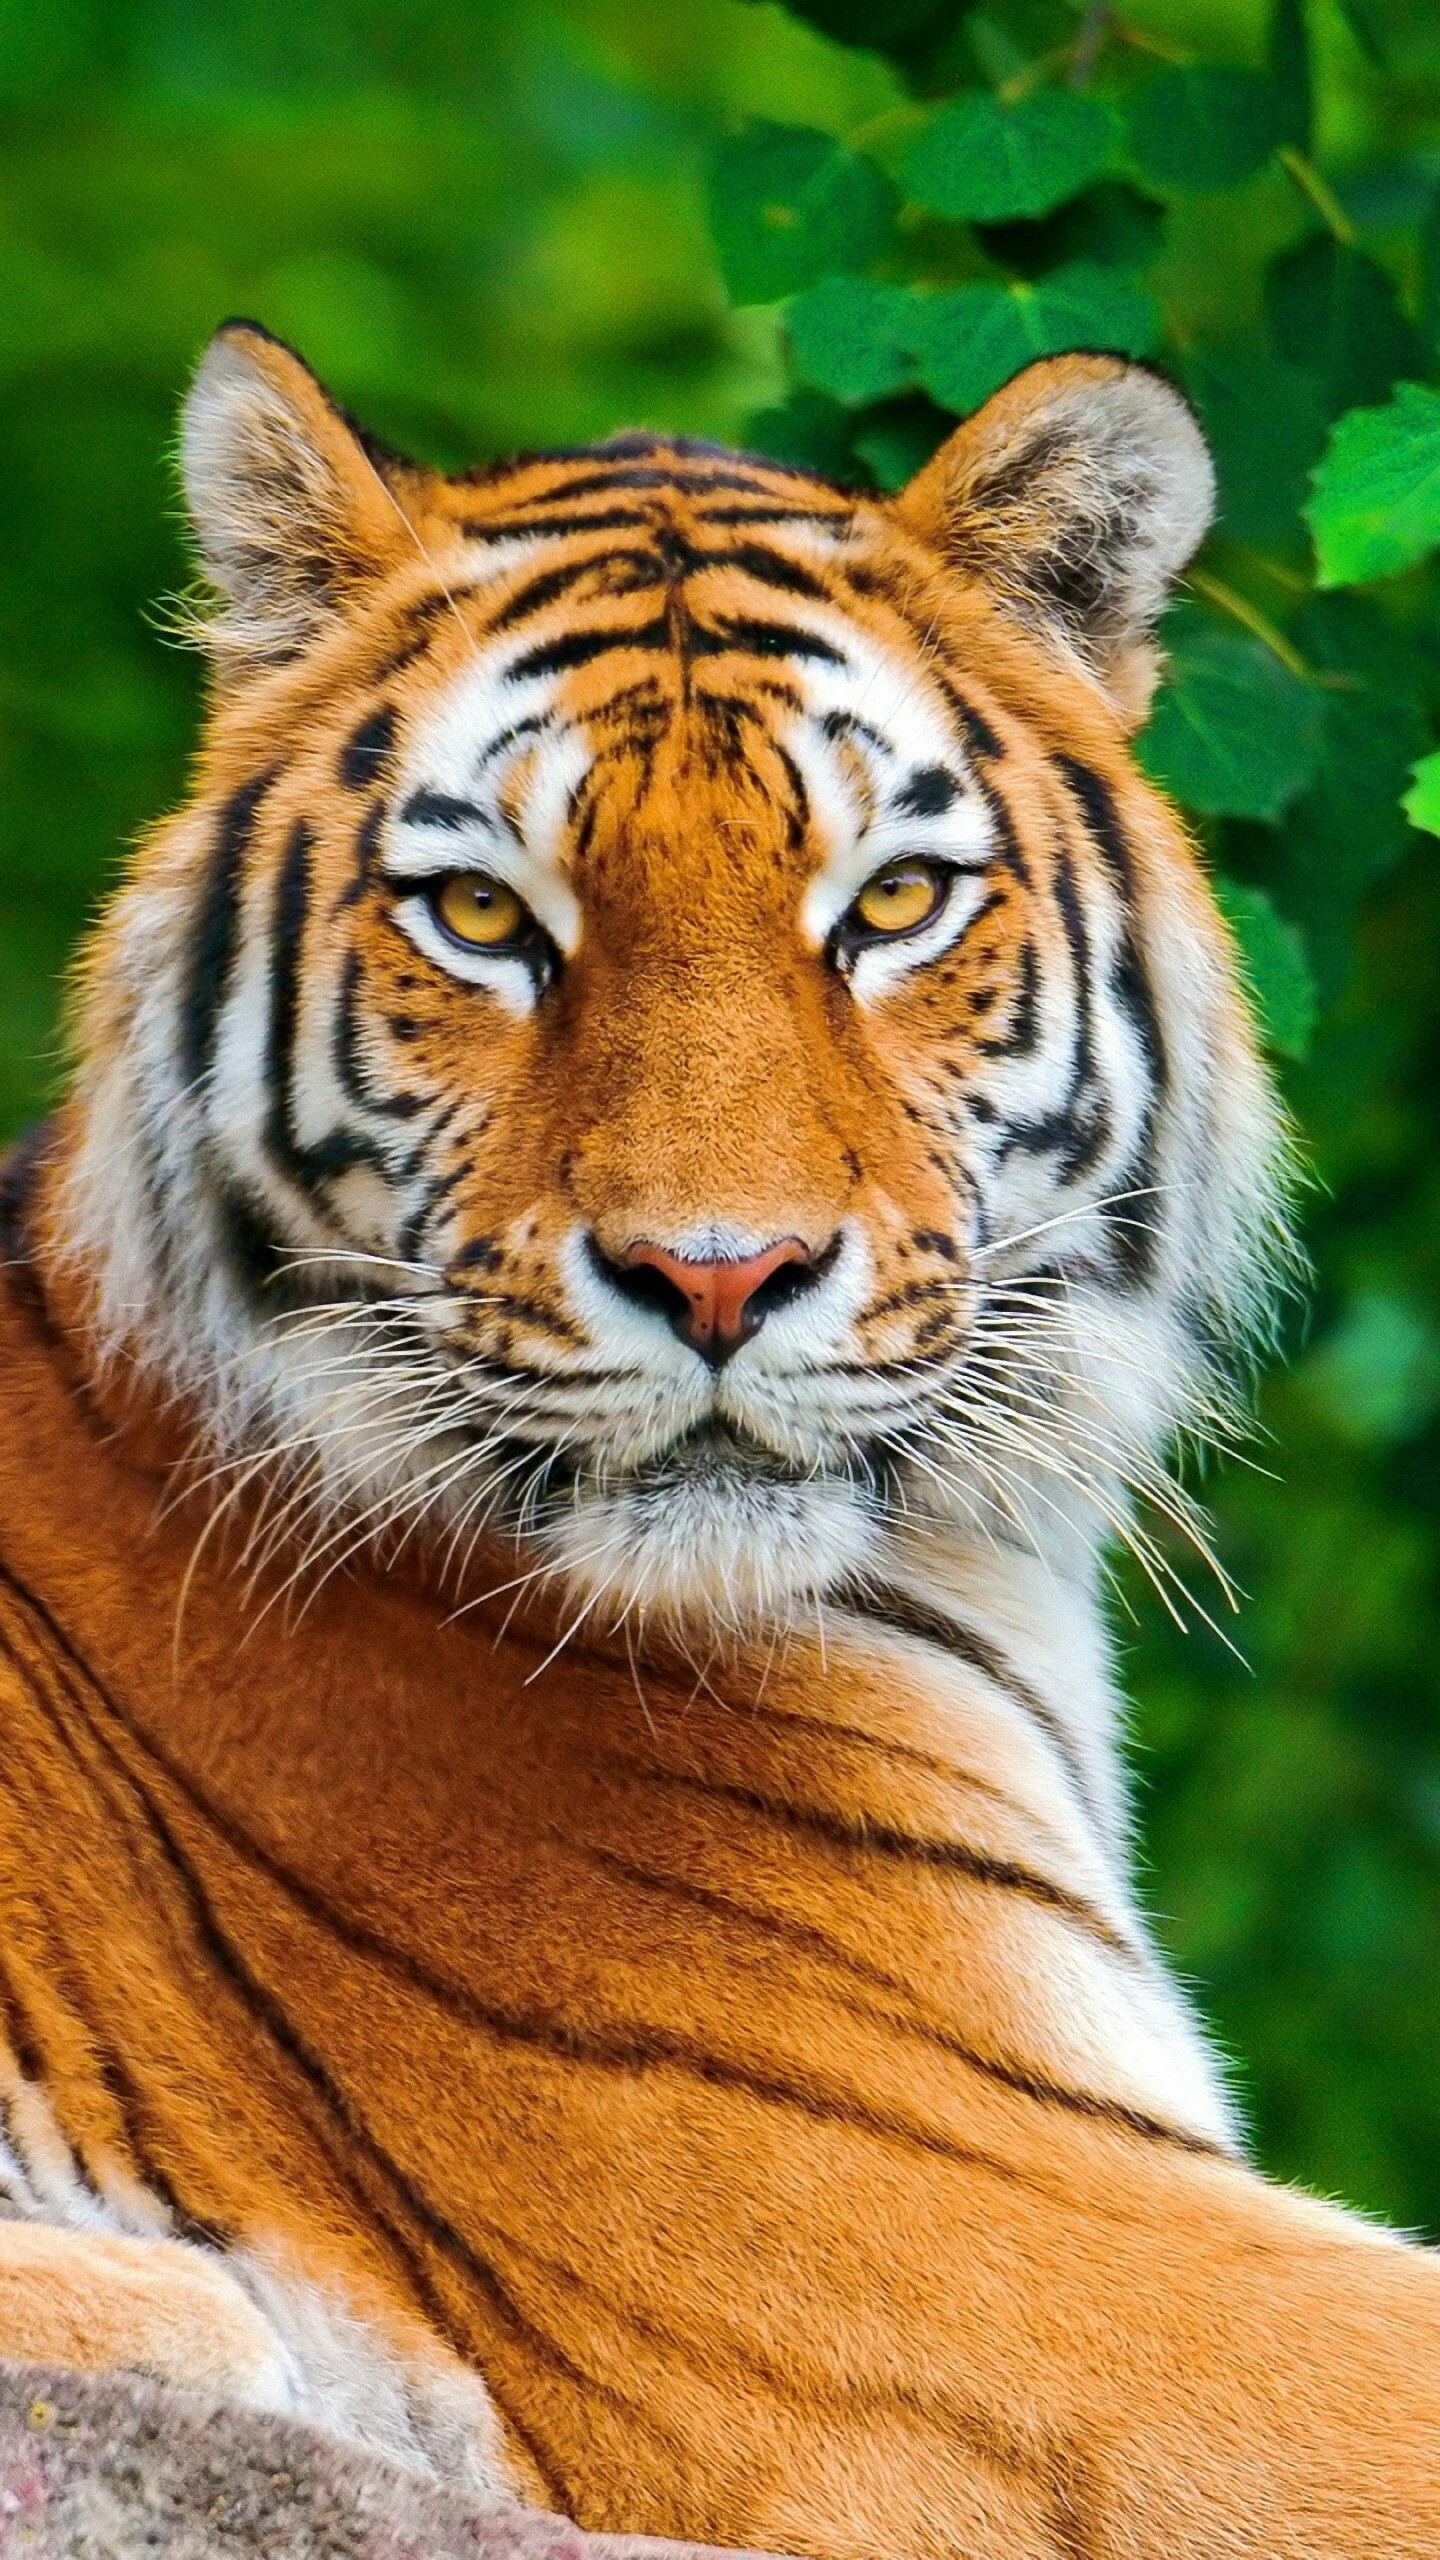 Tiger: Across their range, tigers face unrelenting pressures from poaching, retaliatory killings, and habitat loss. 1440x2560 HD Wallpaper.